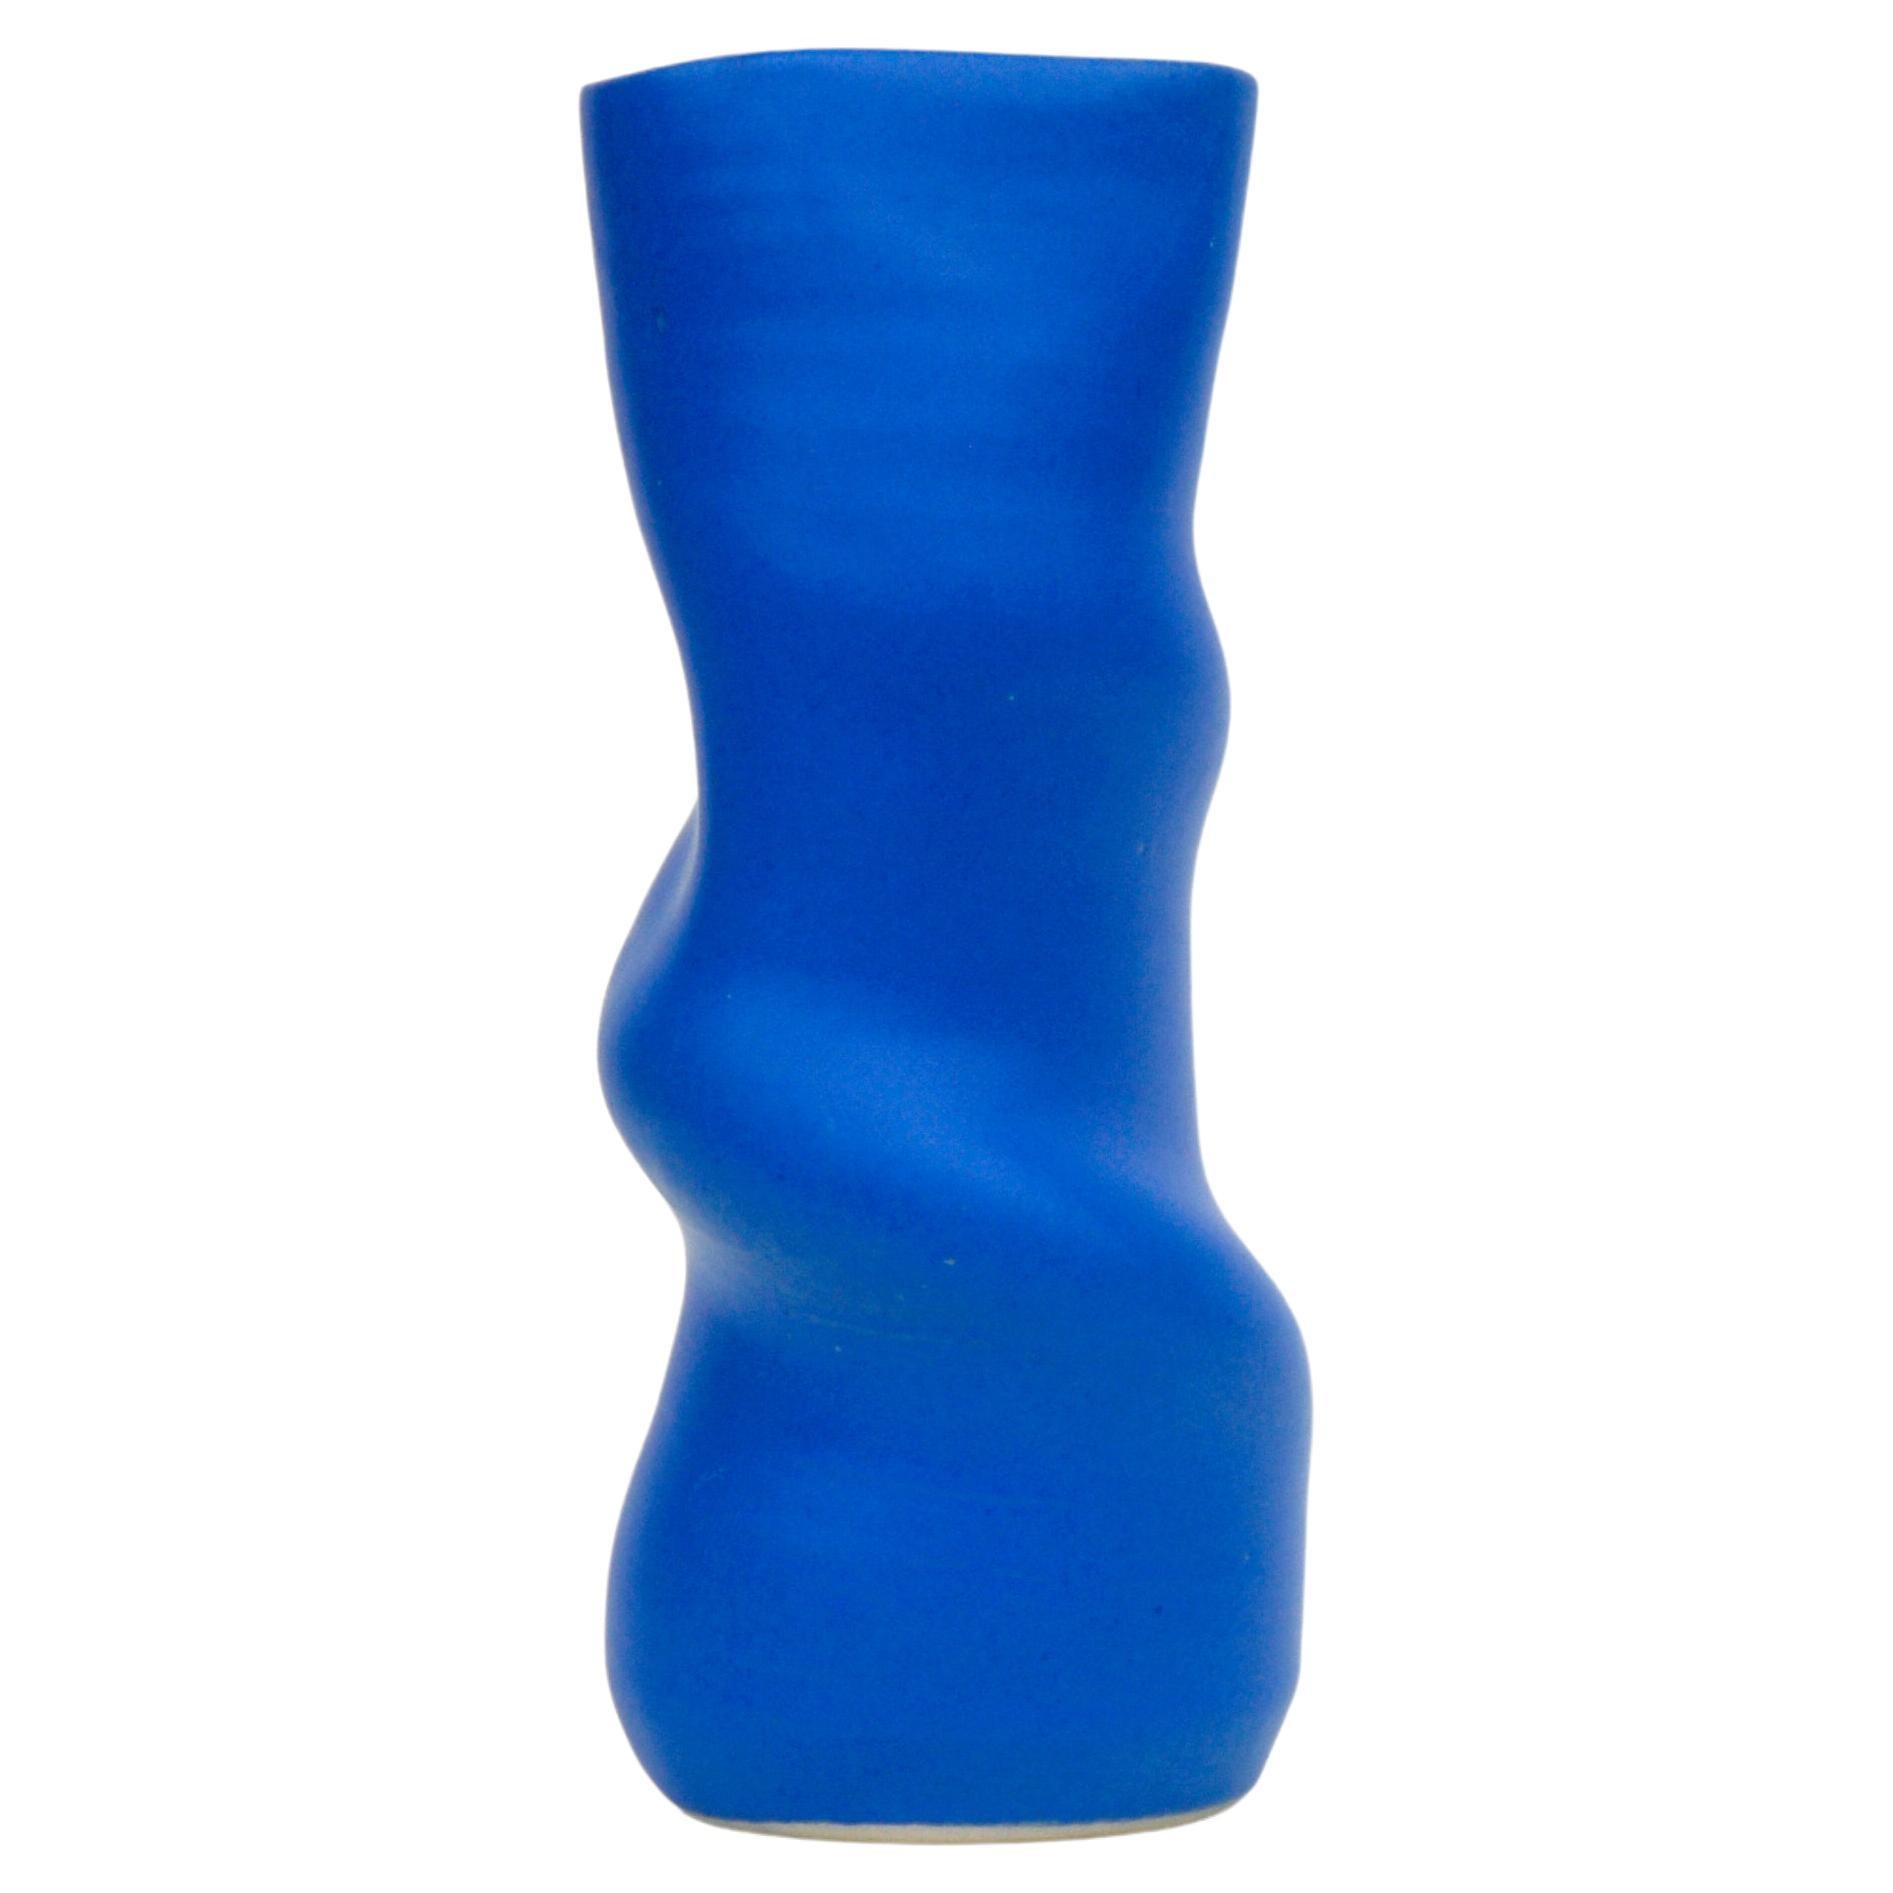 Helix-Vase in Electric Blue, handgefertigt in Barcelona von niho Ceramics im Angebot